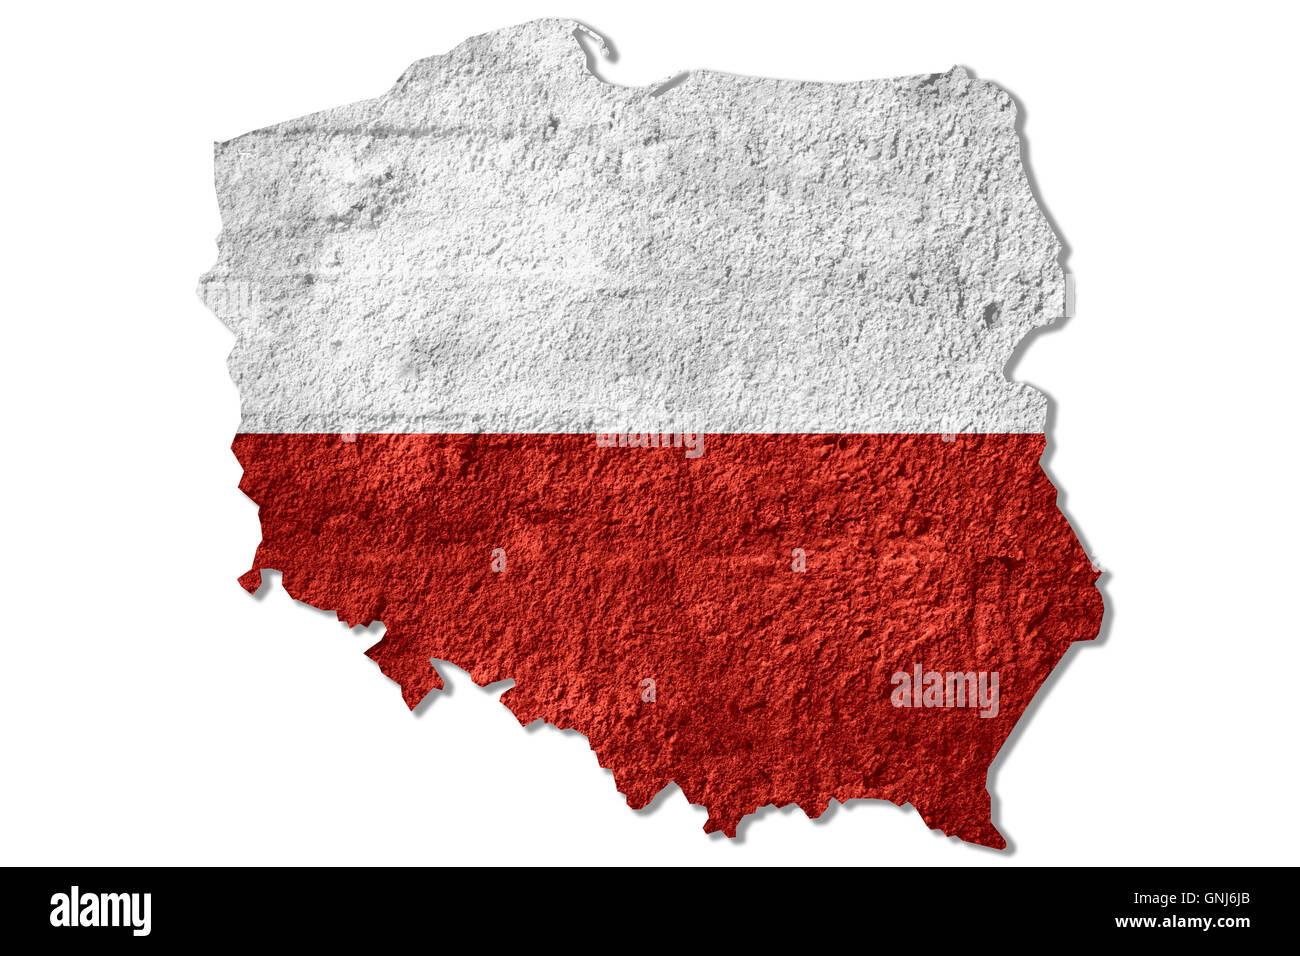 Mapa de Polonia o la frontera polaca esbozo de textura áspera Foto de stock